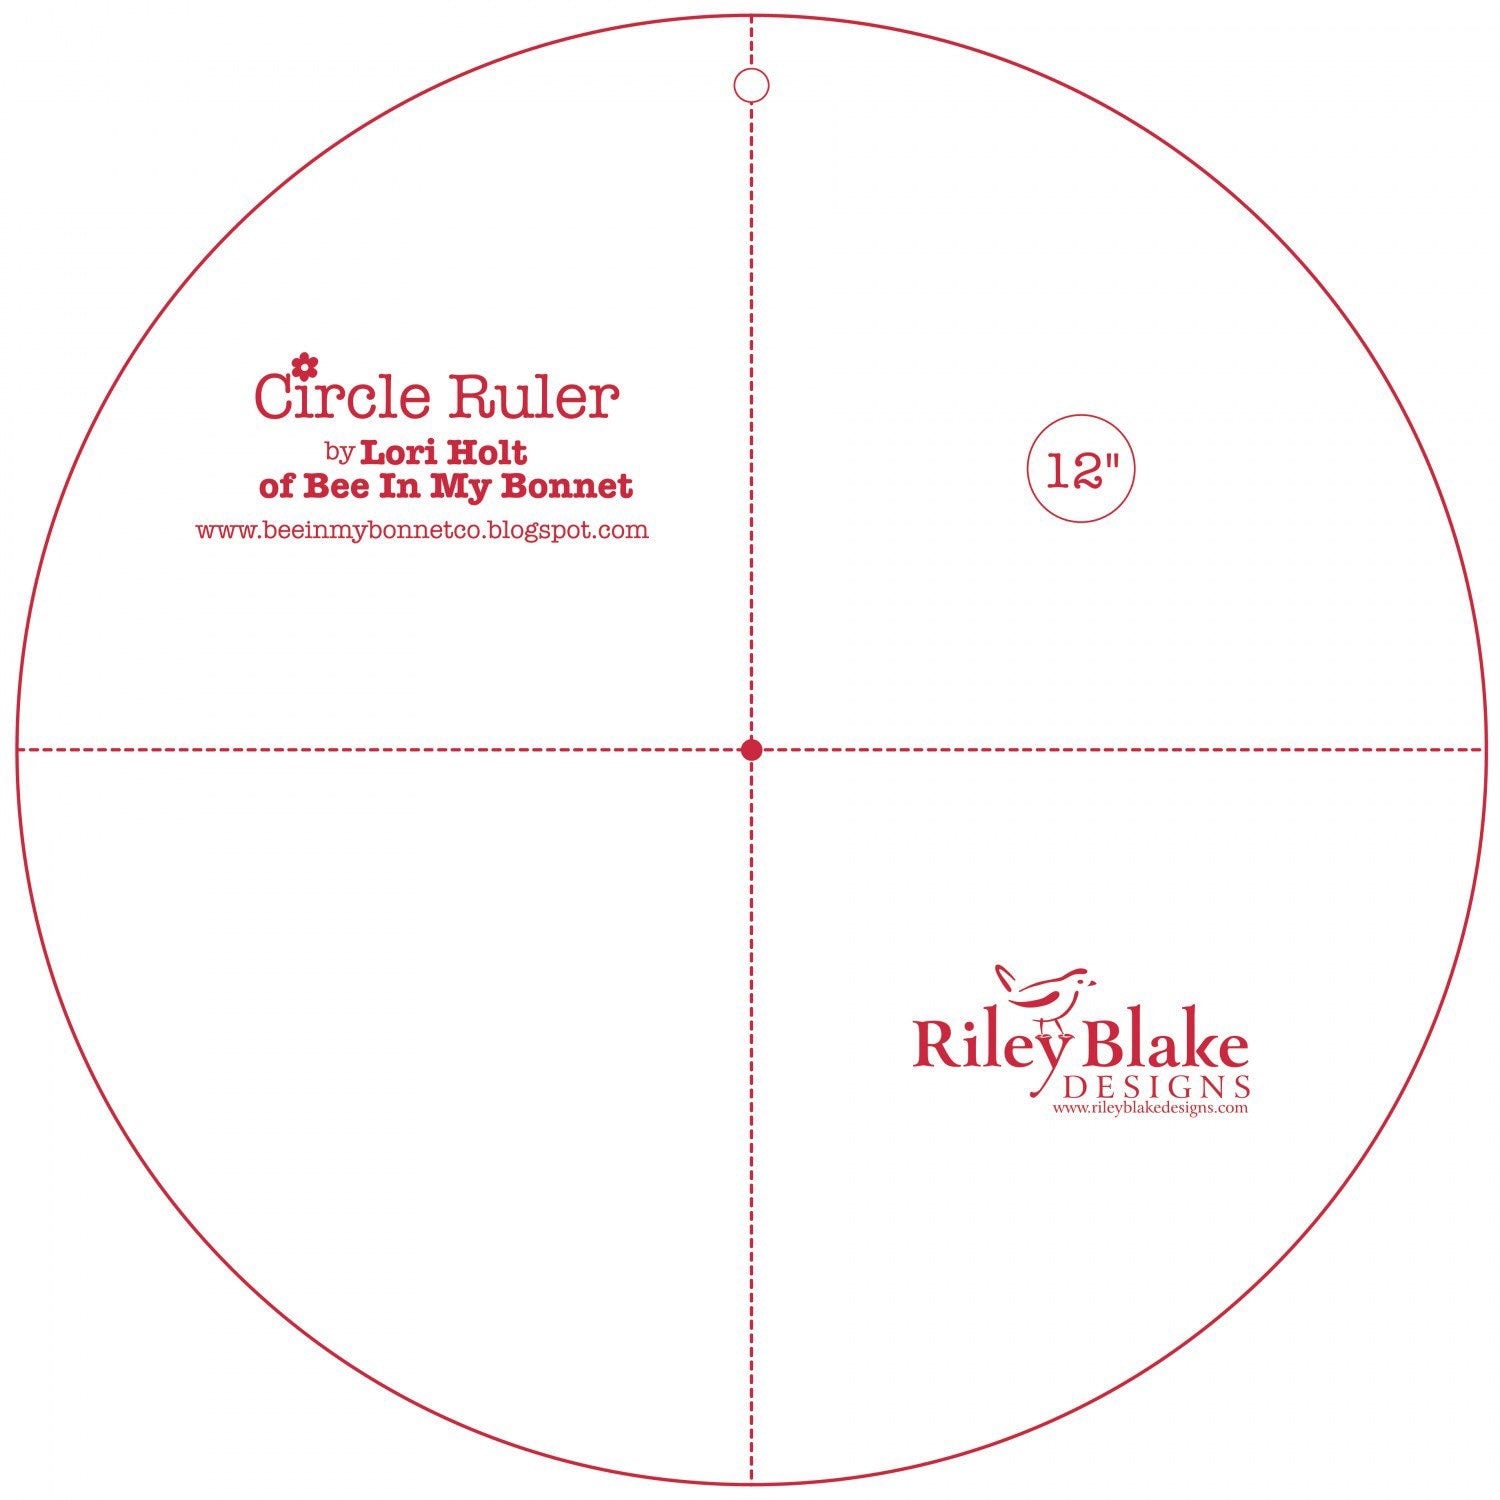 Lori Holt 12” Circle Ruler - Bee in My Bonnet